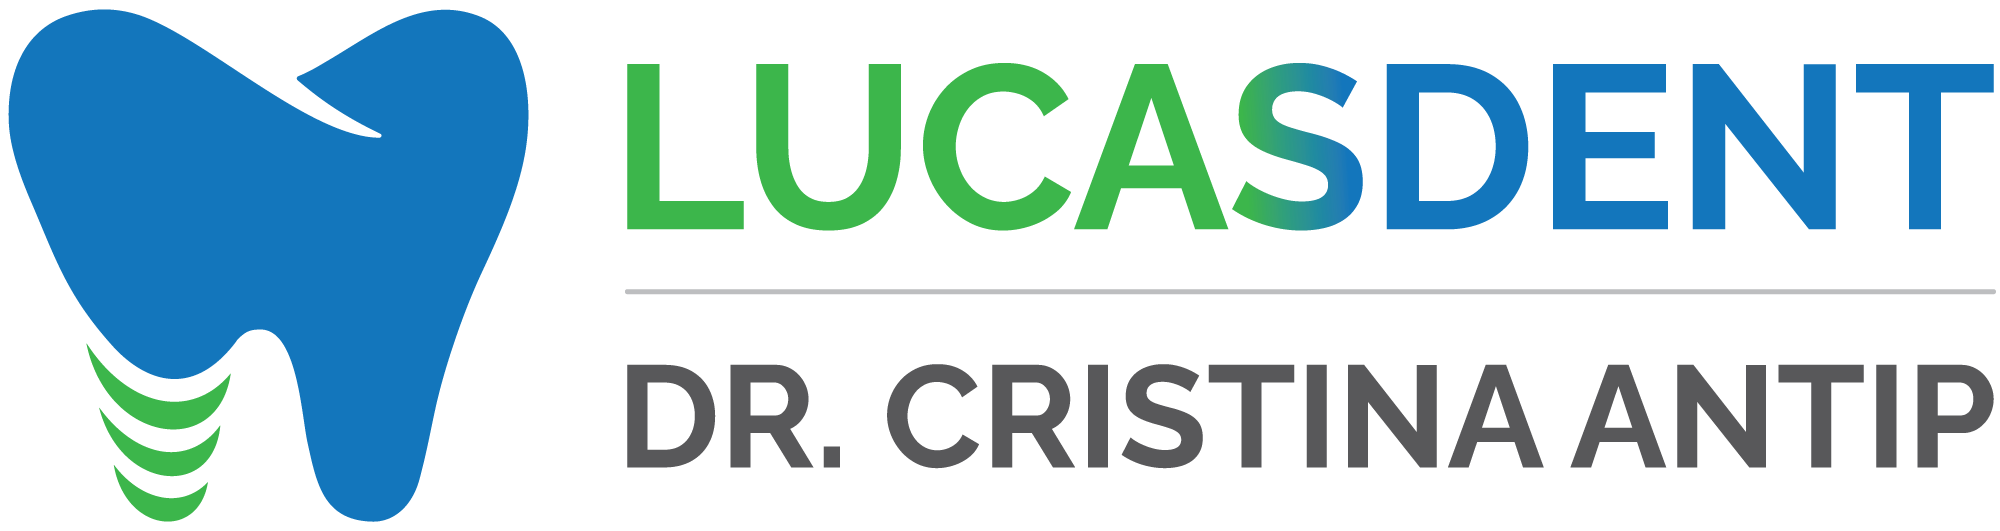 clinica lucasdent logo bottom